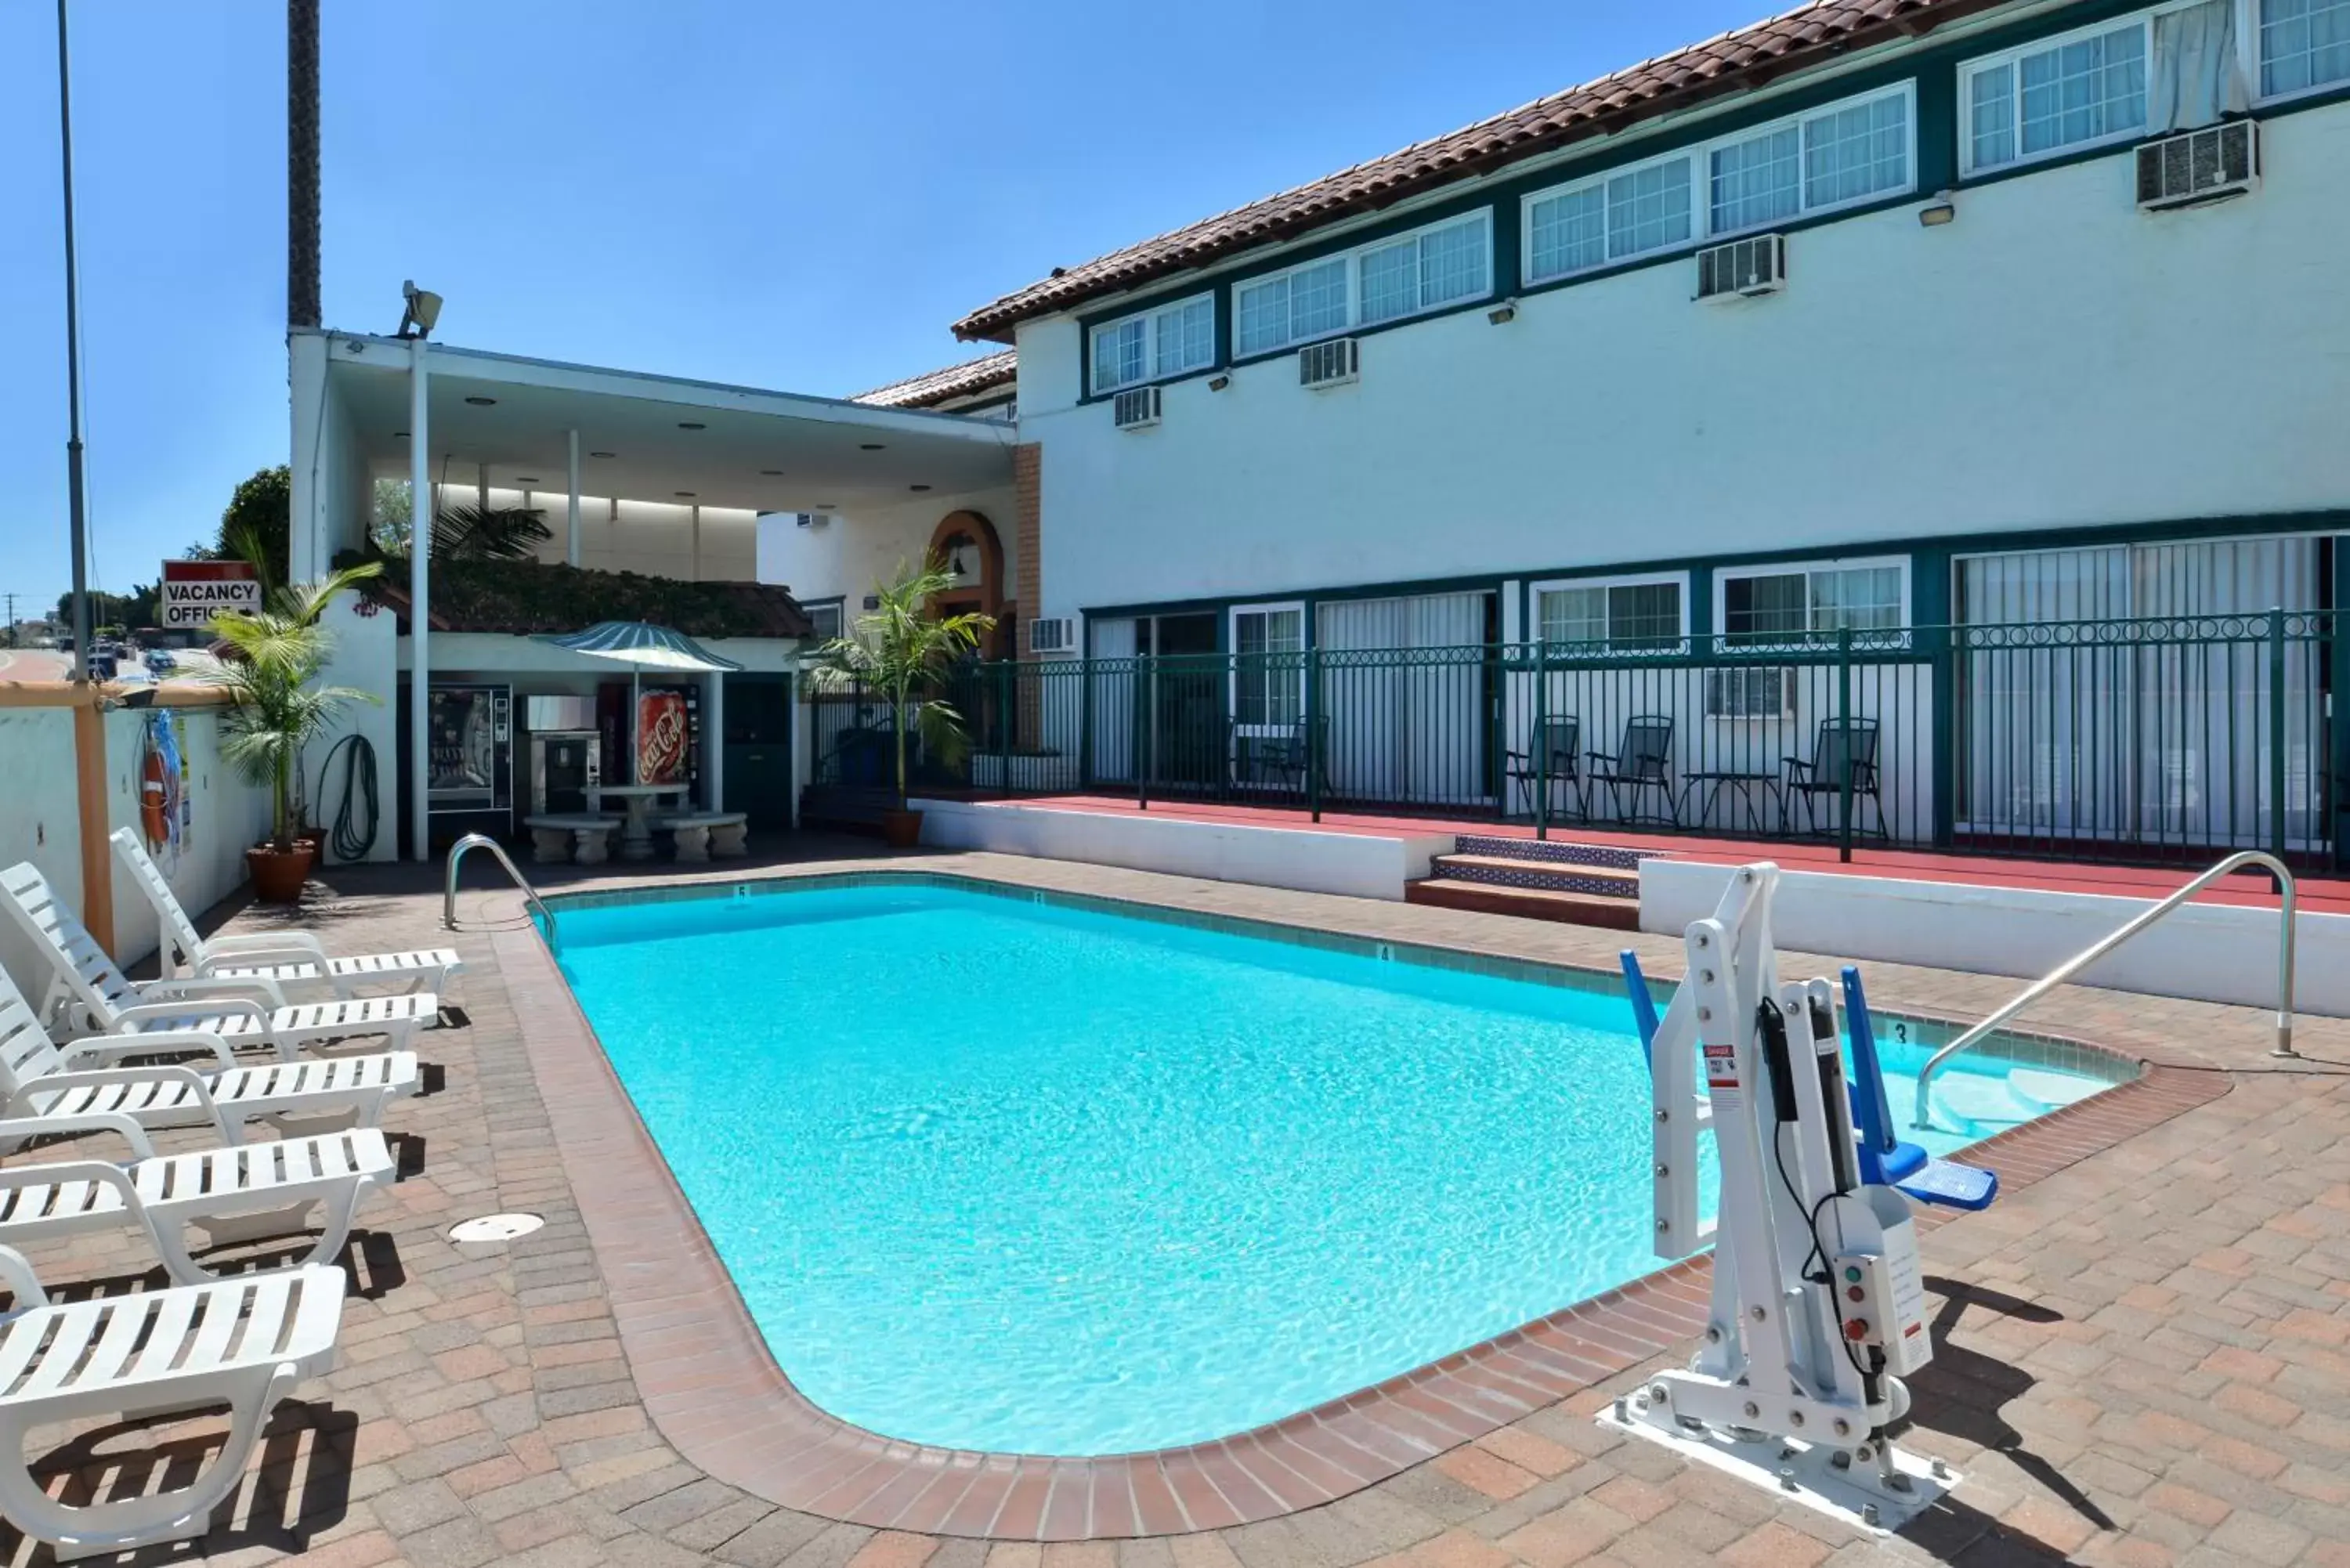 Swimming pool in Americas Best Value Inn Loma Lodge